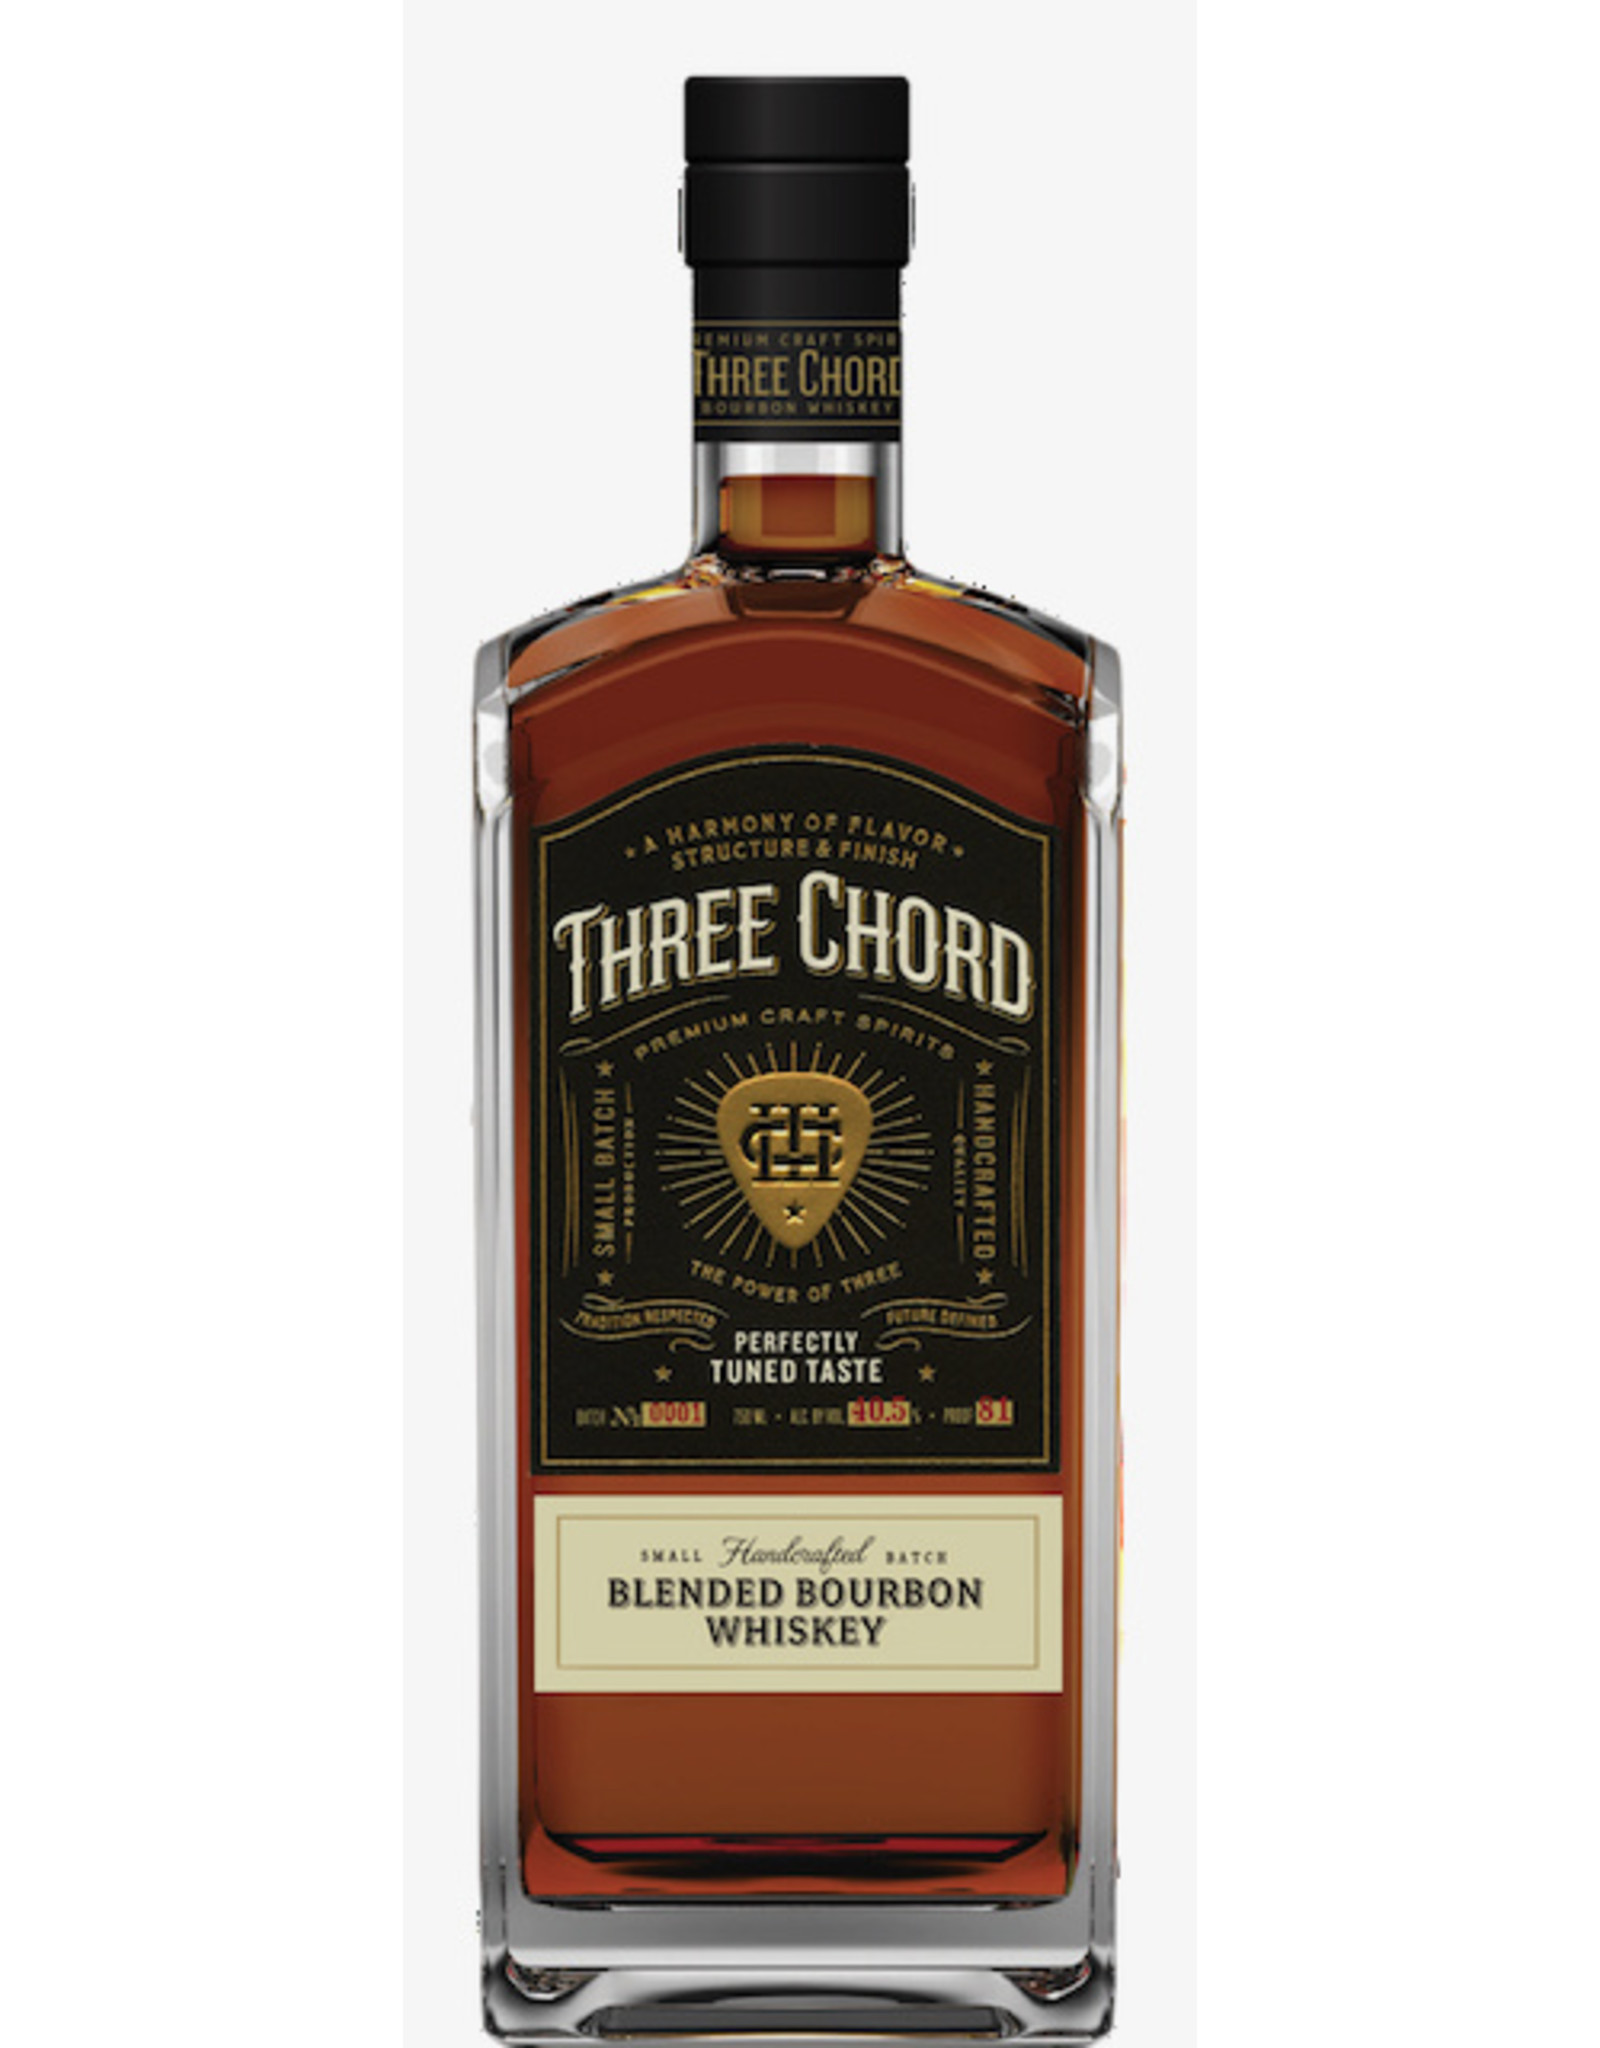 Three Chord "Strange Collaboration" Bourbon